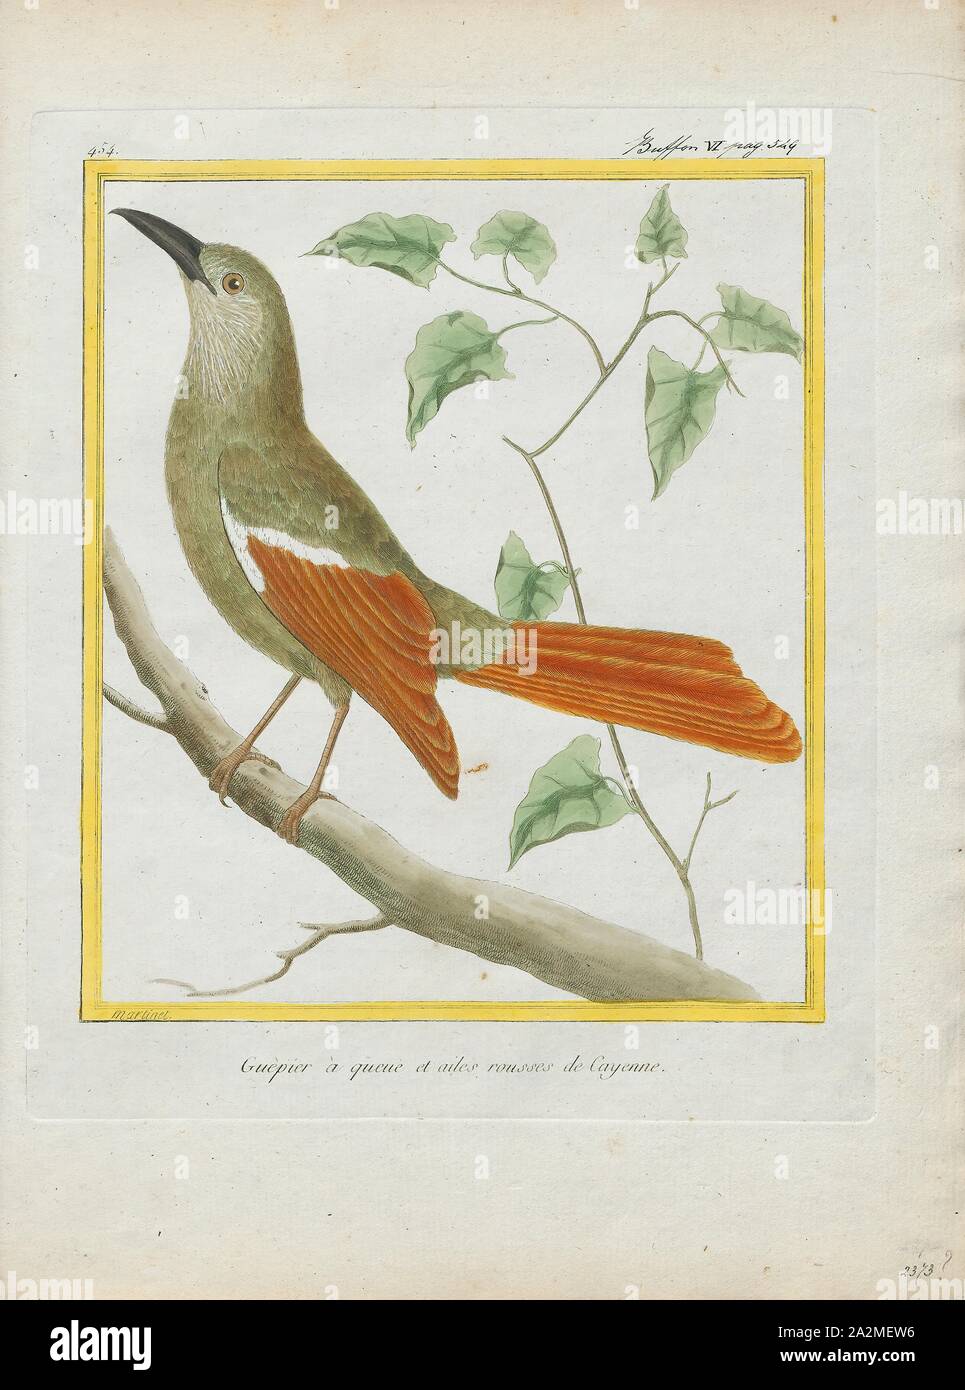 Dendrocolaptes giganteus, Print, Dendrocolaptes is a genus of Neotropical birds in the Dendrocolaptinae subfamily., 1700-1880 Stock Photo